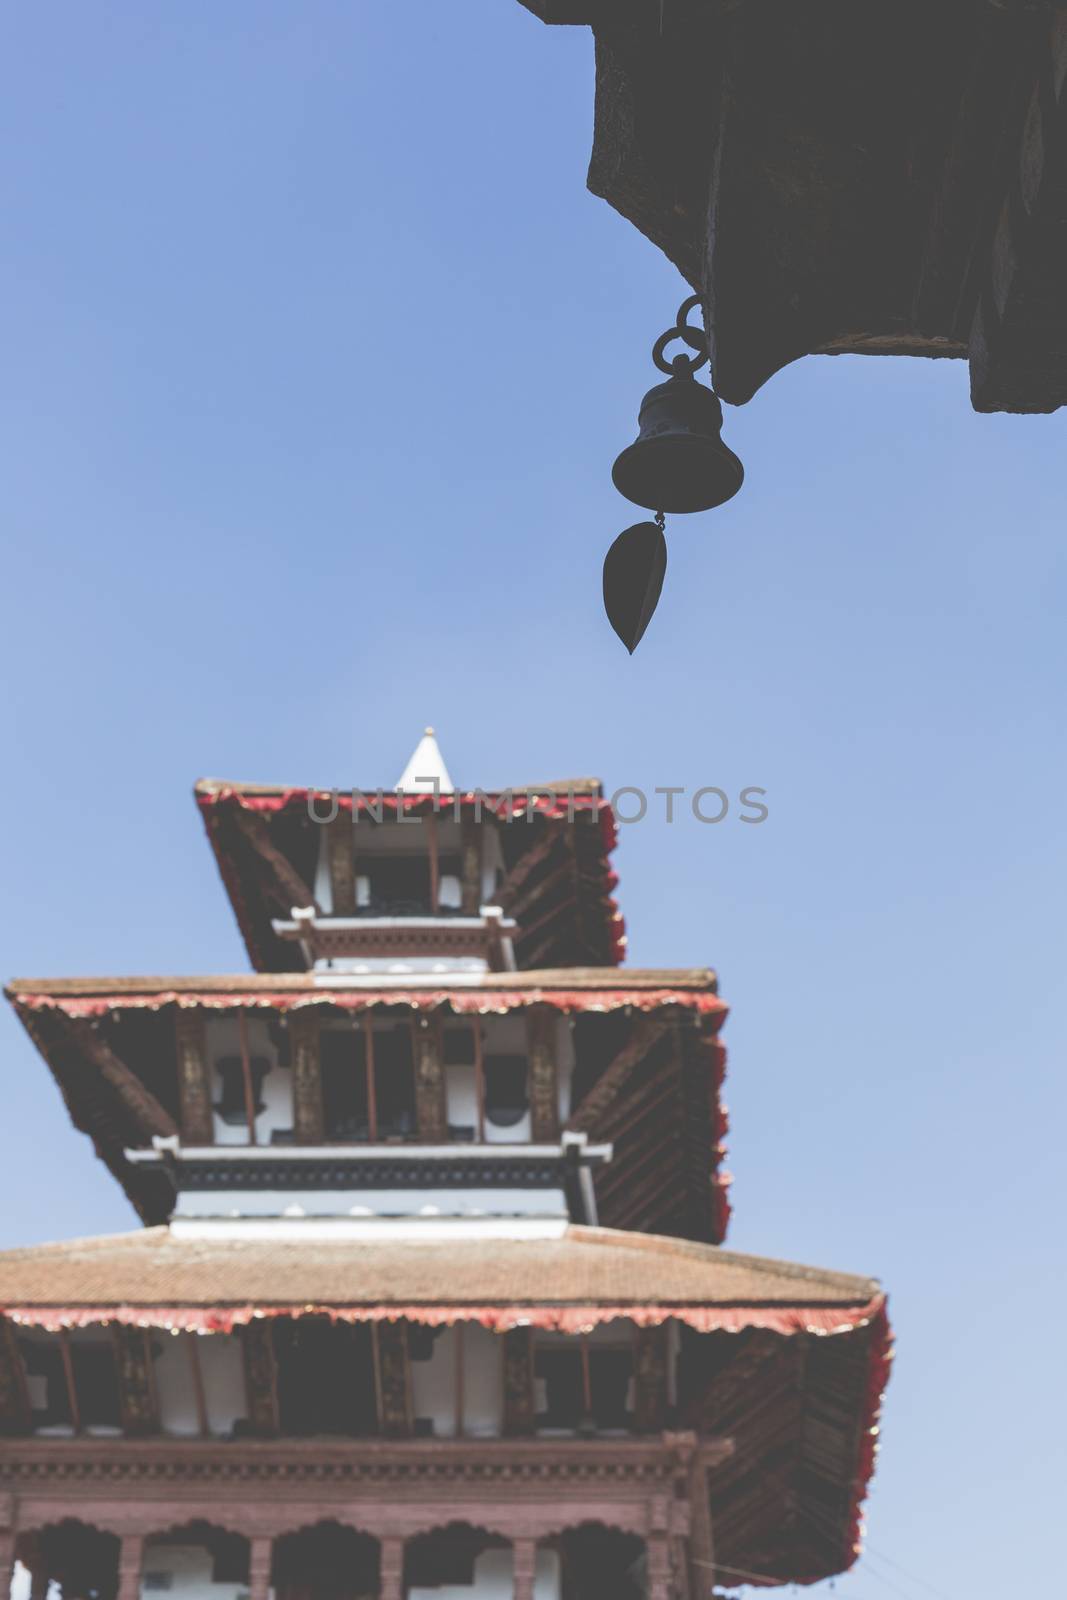 Pattan Durbar Square in Kathmandu, Nepal

